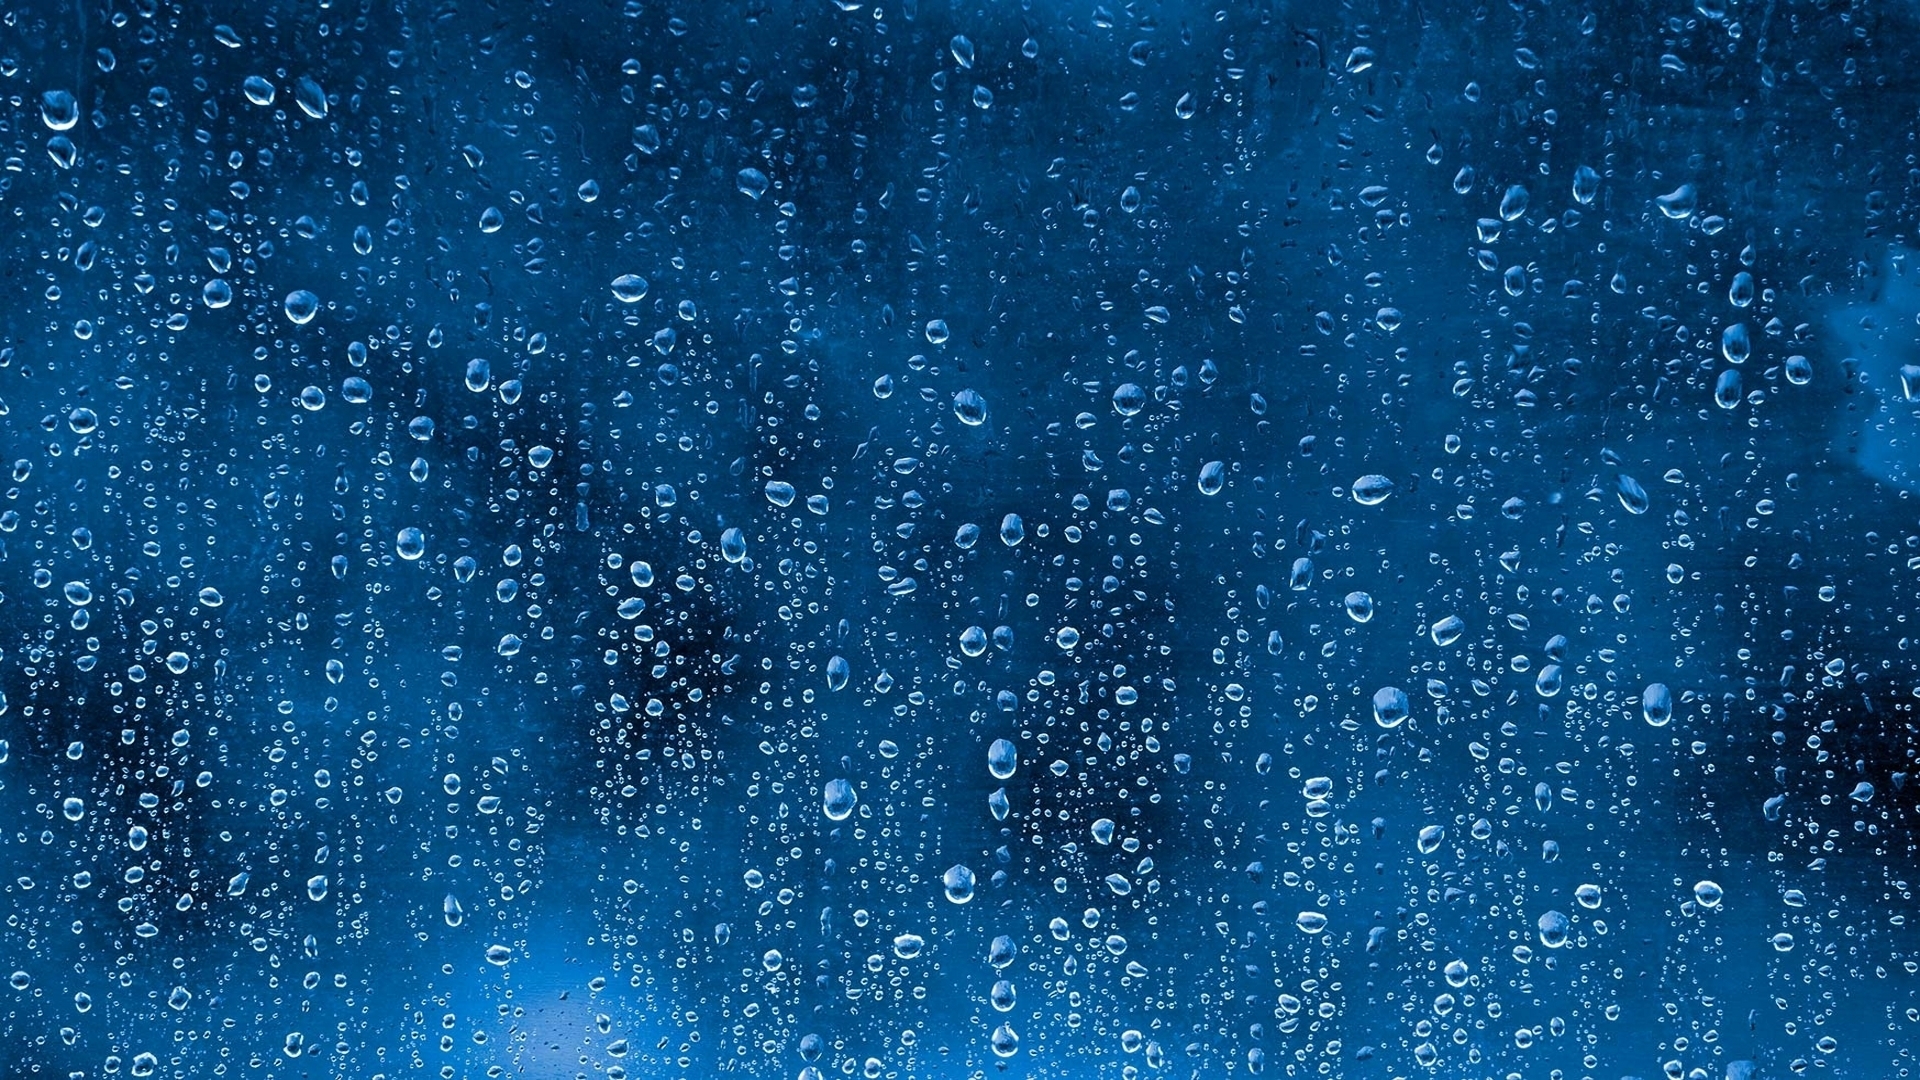 storms rain window glass reflection abstract bokeh wallpaper 1920x1080